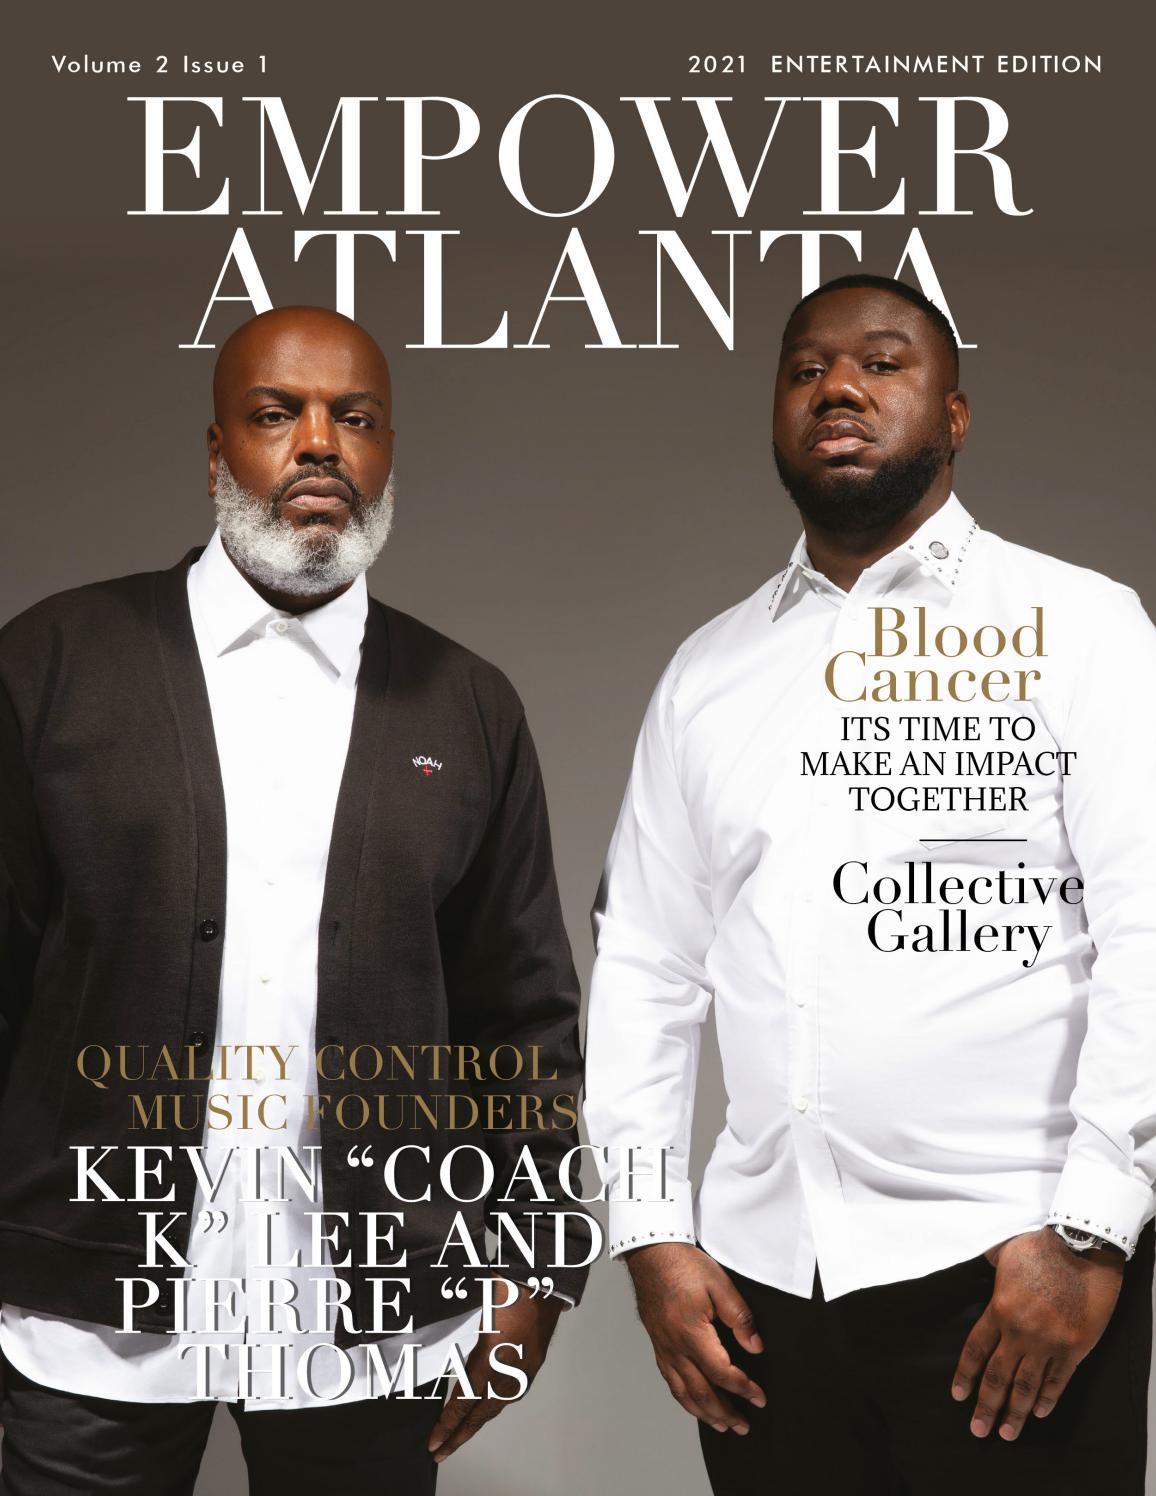 Empower Atlanta Magazine 2021 Entertainment Edition